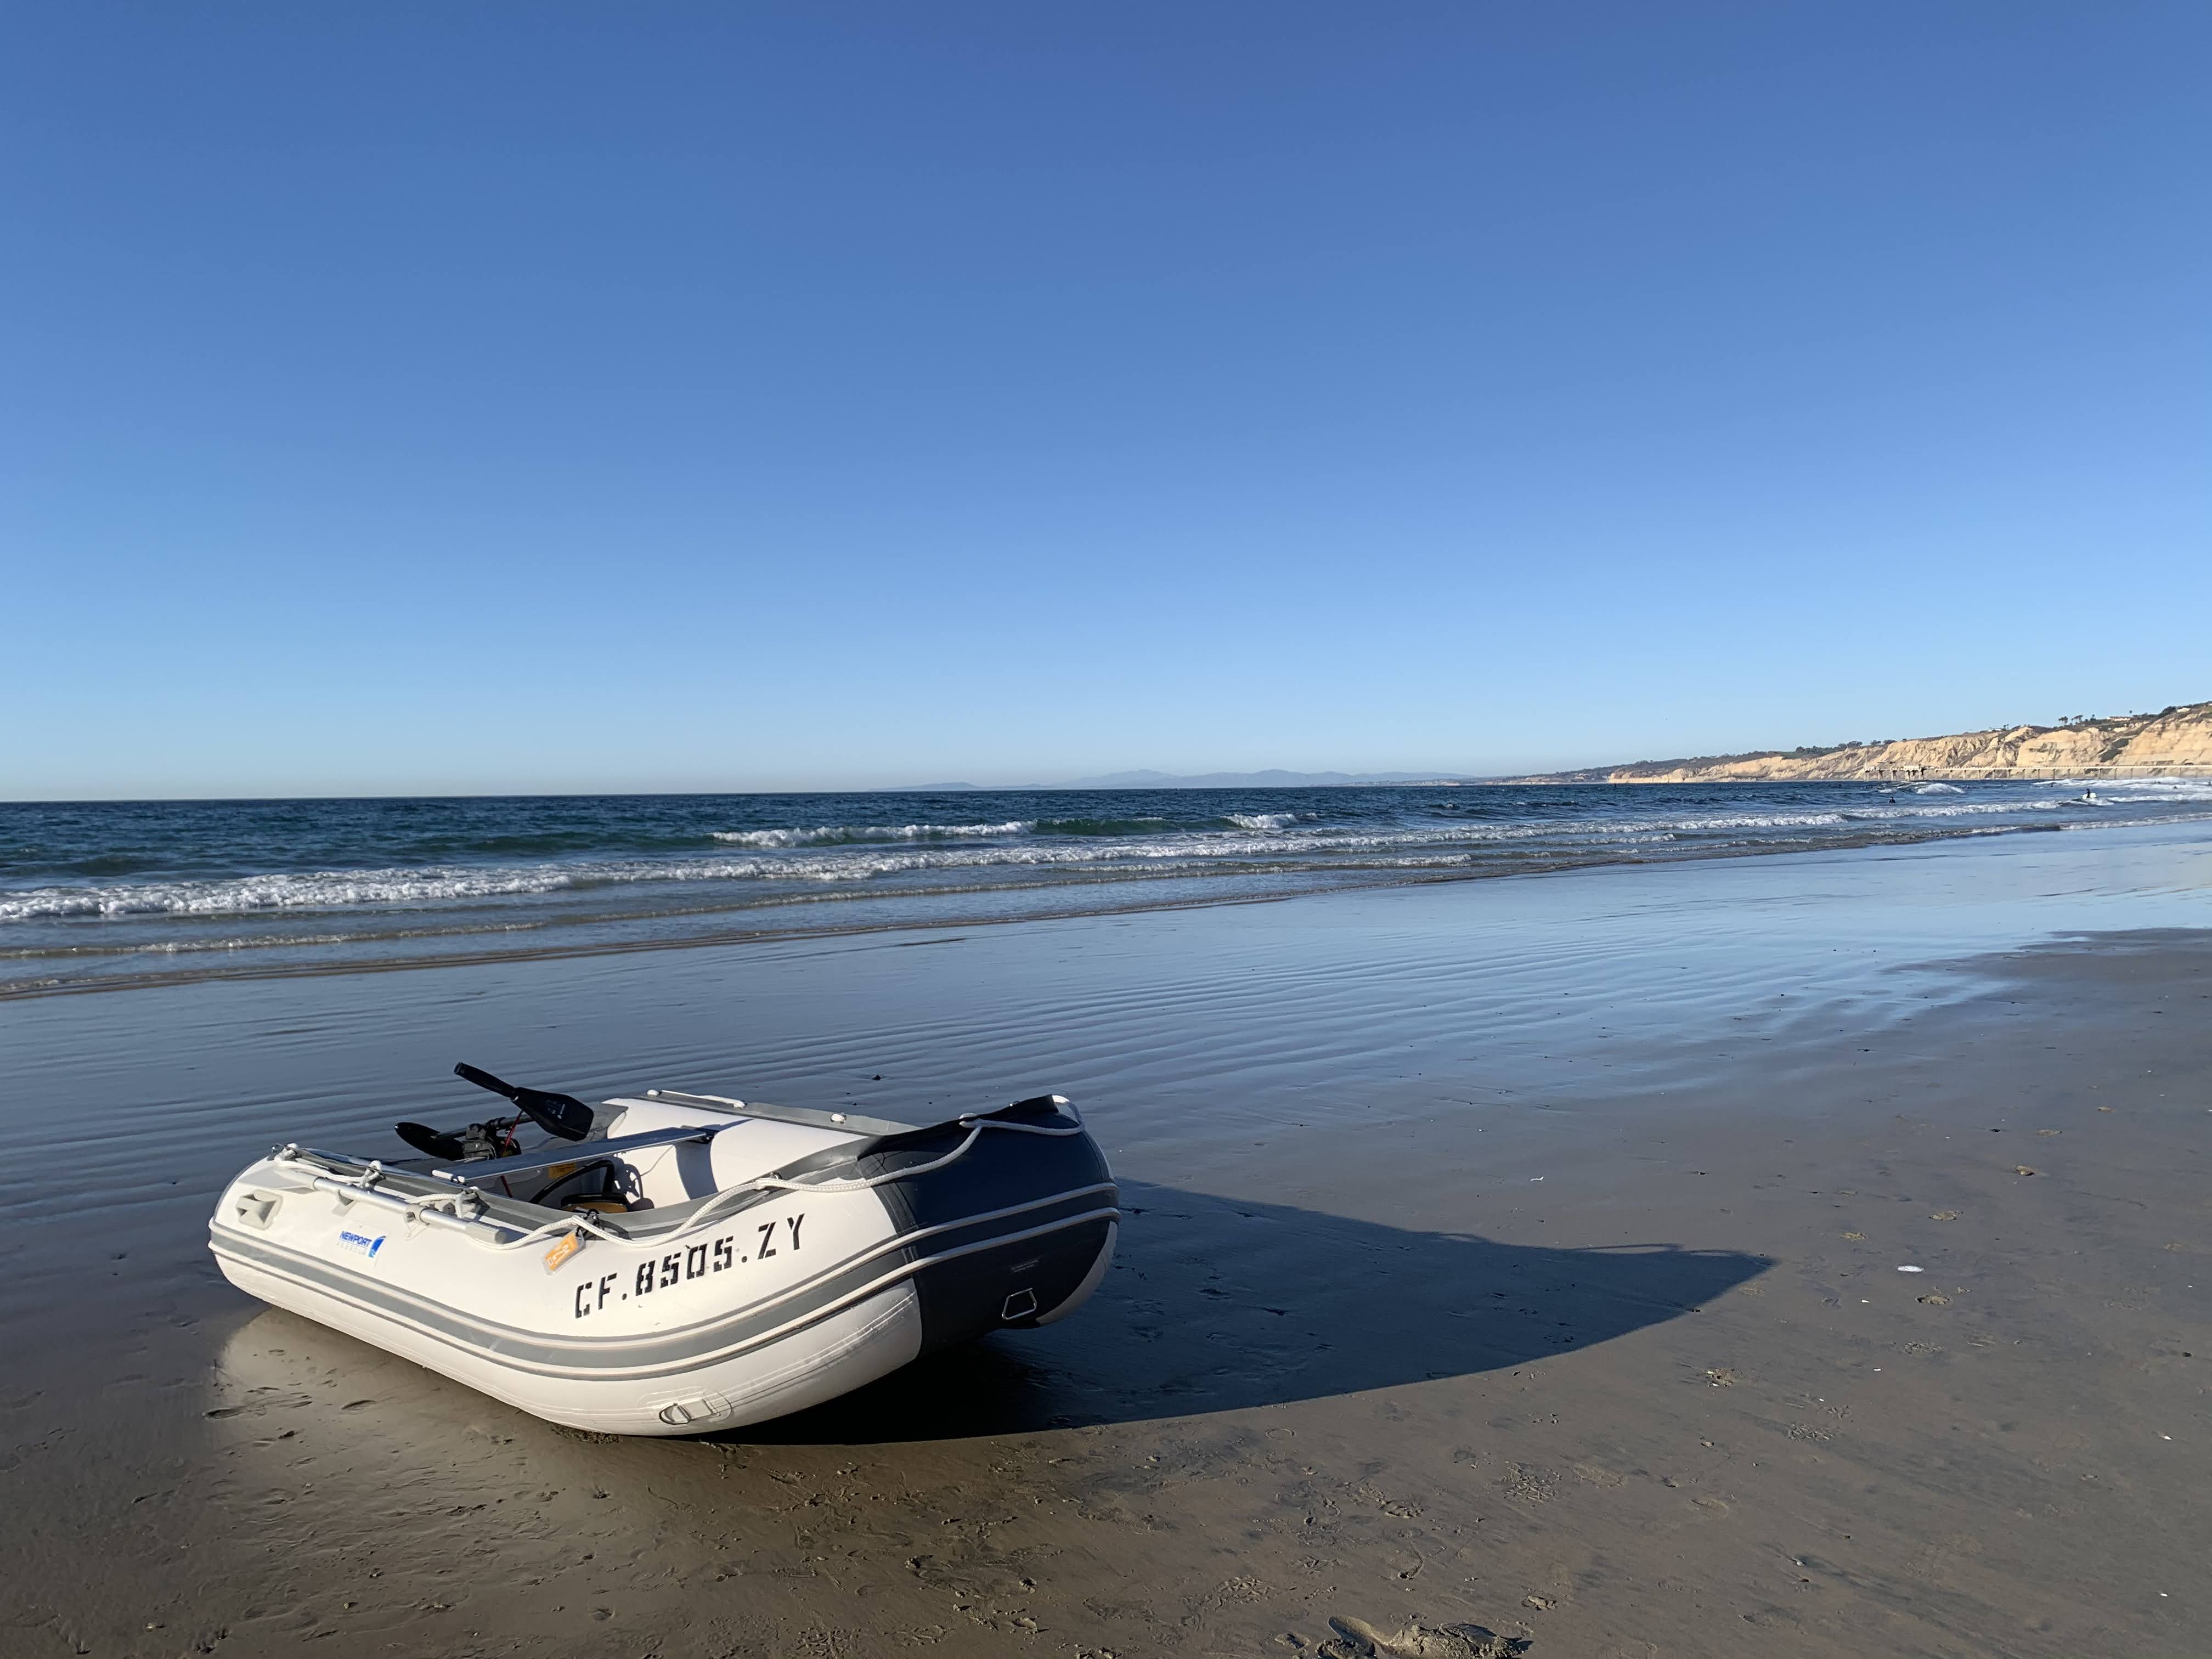 Alt__Newport_10__6__Inflatable_boat_on_a_Beach_jpeg.jpg